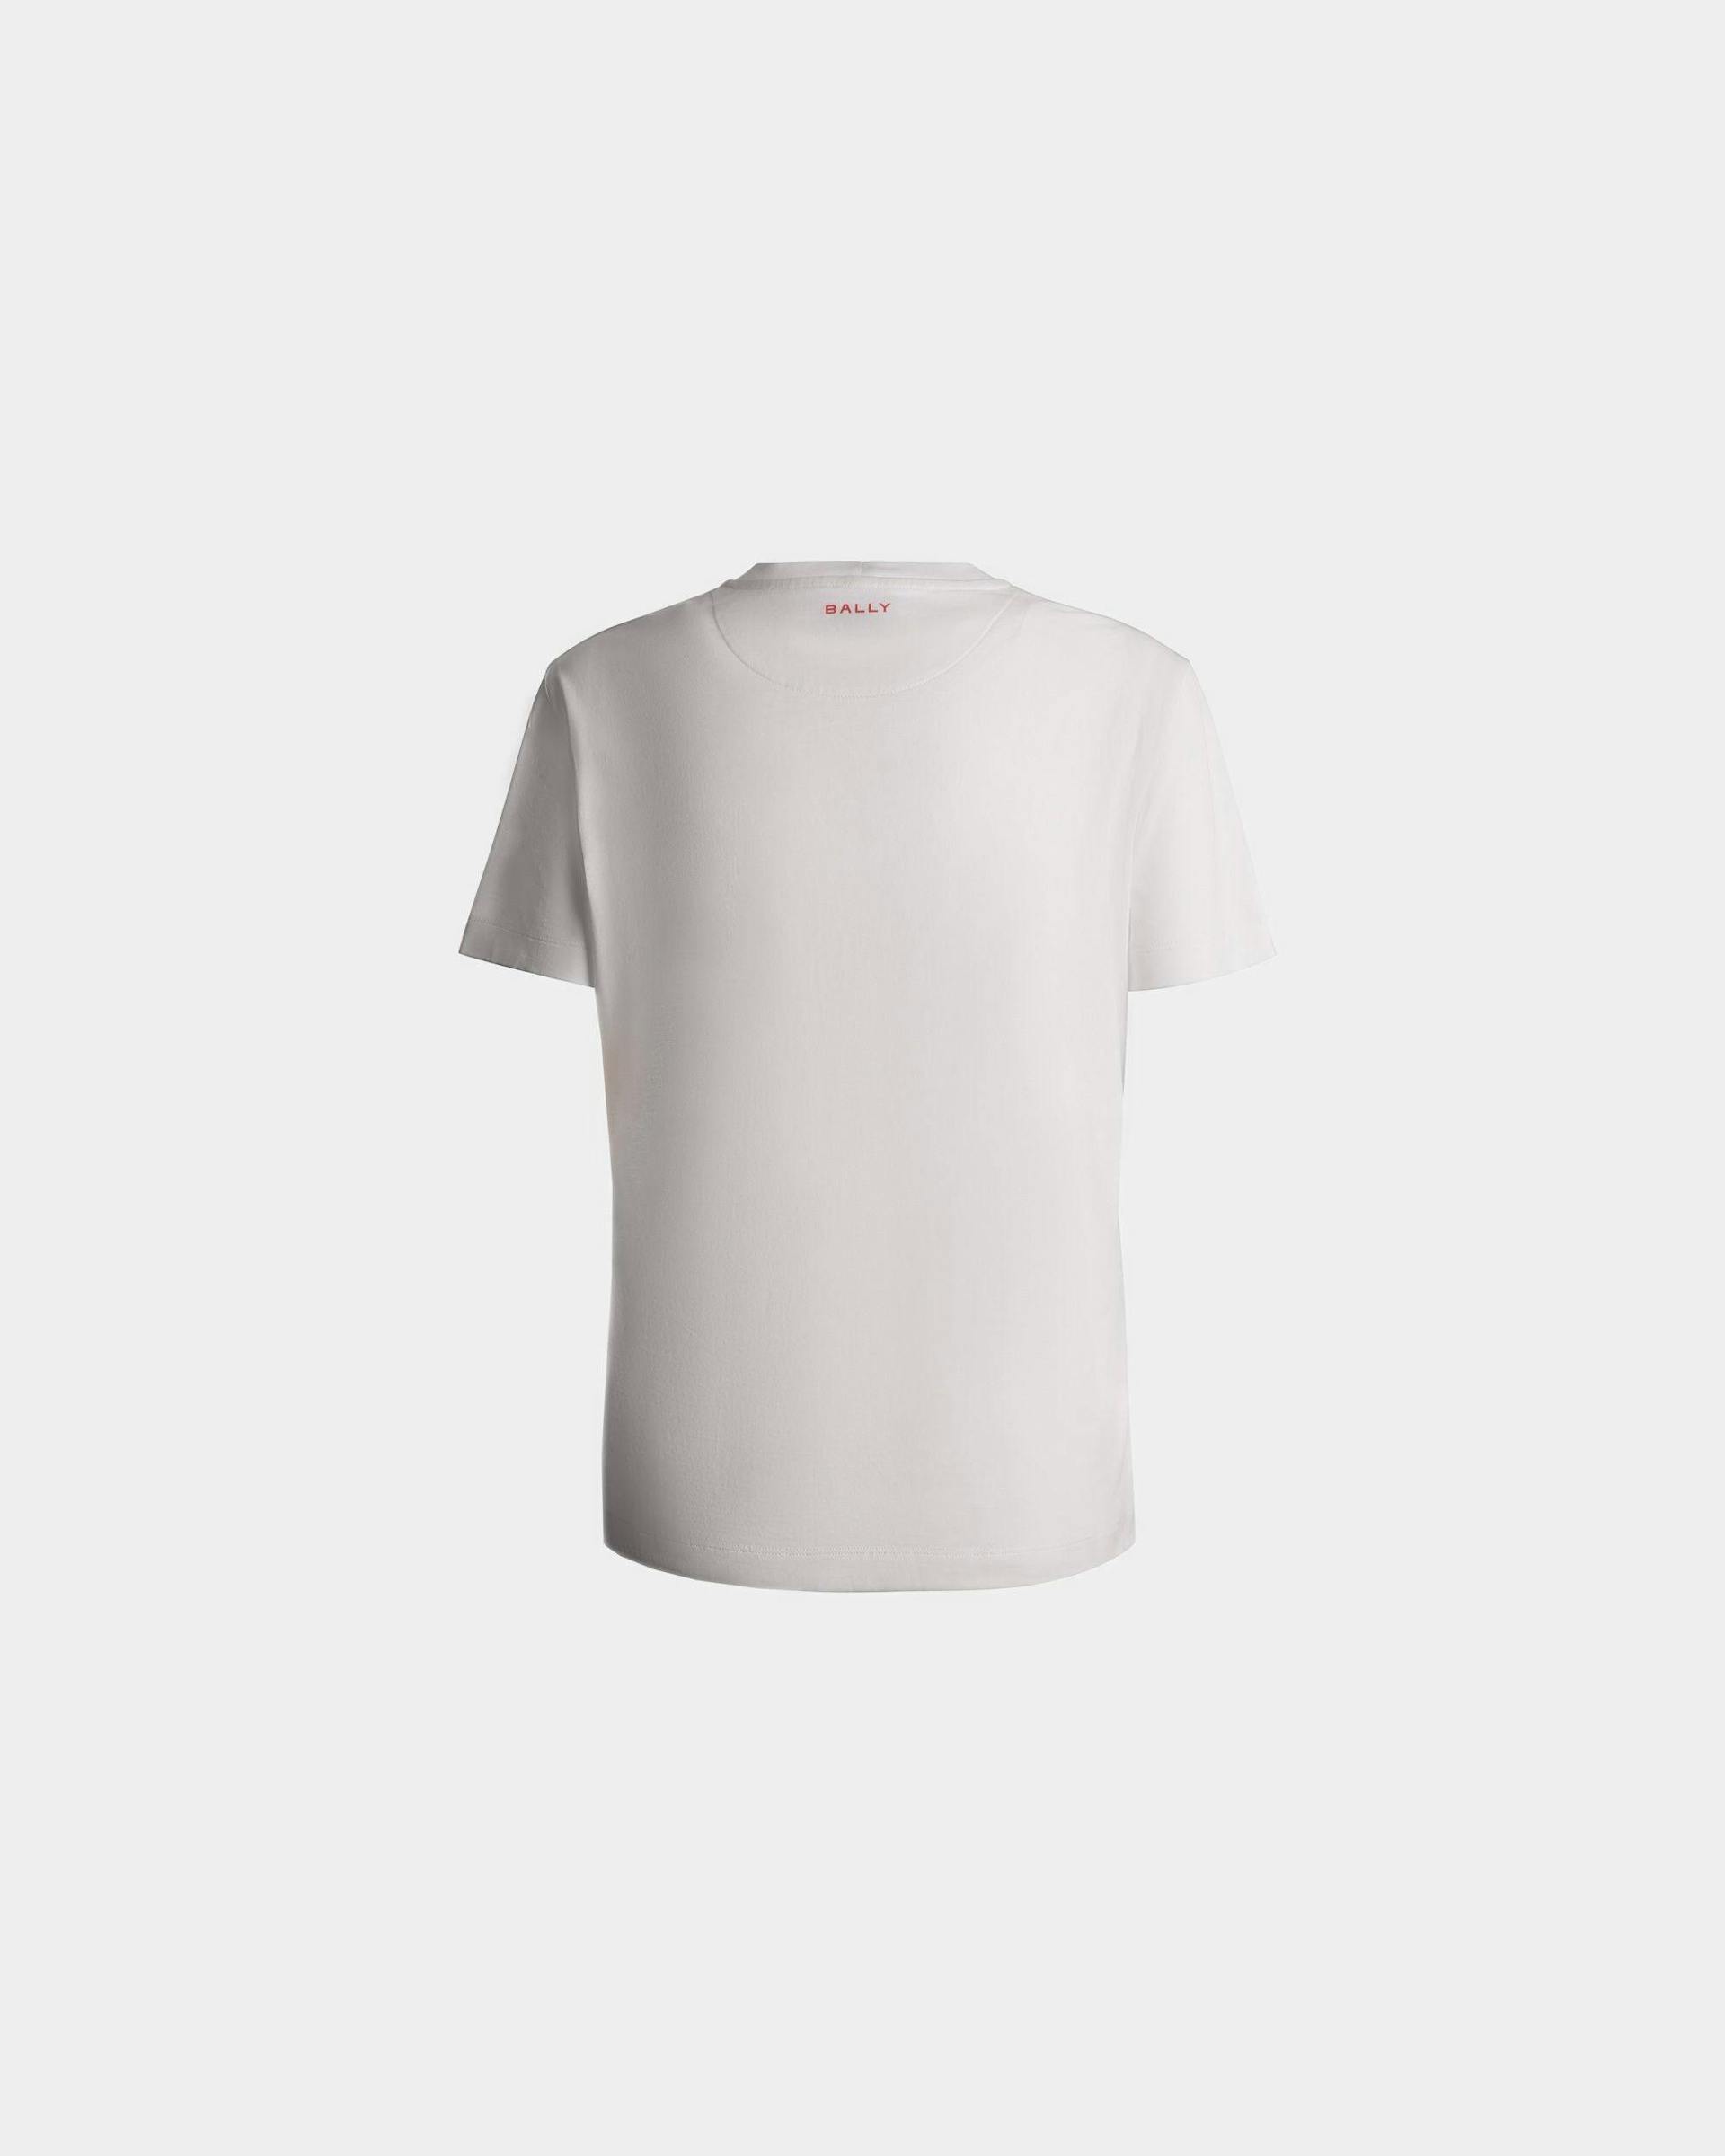 Women's T-Shirt In White Cotton | Bally | Still Life Back